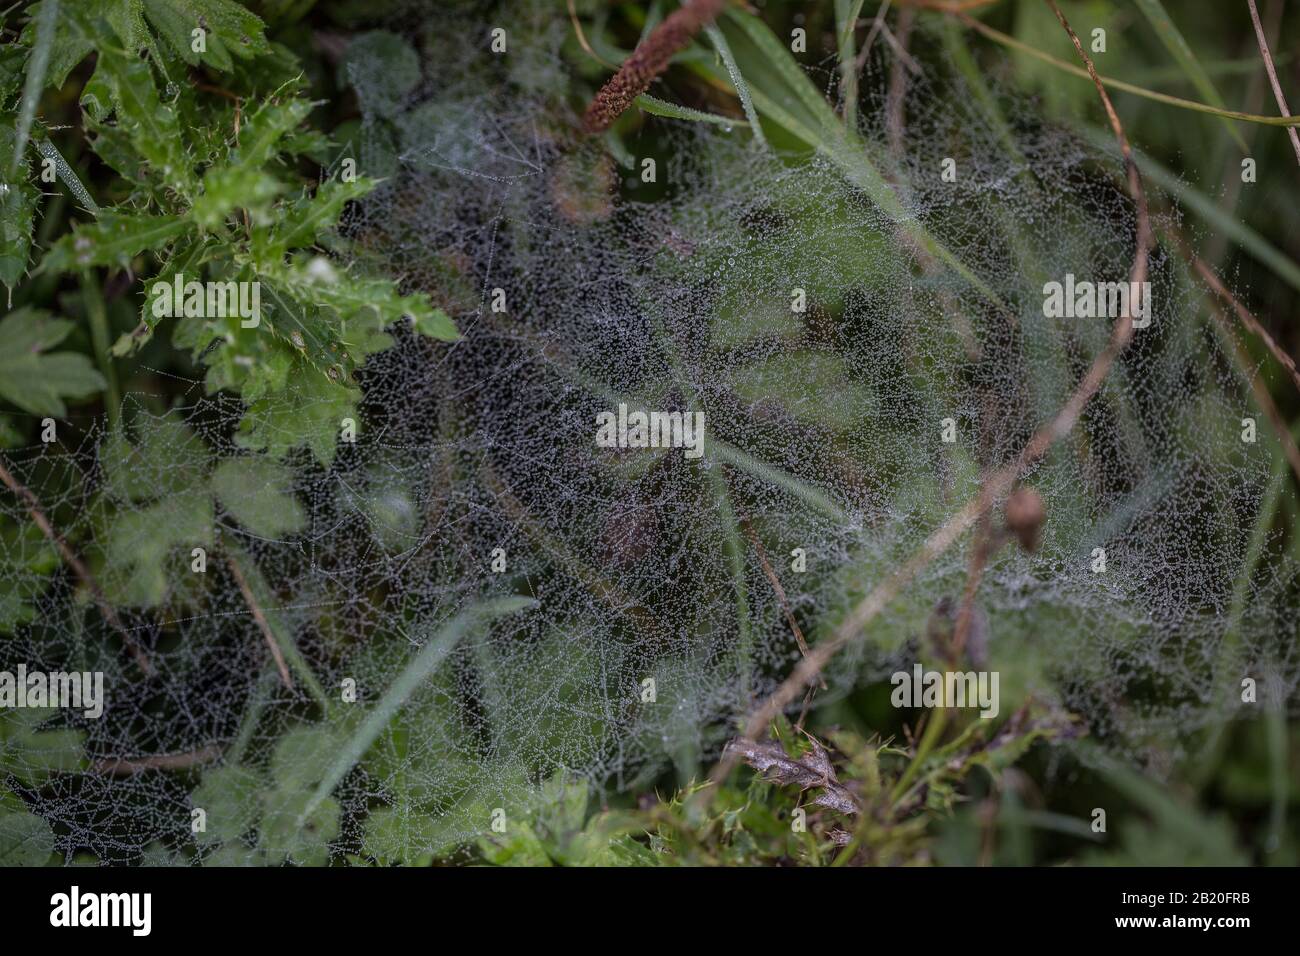 autumnal spider web full of raindrops Stock Photo